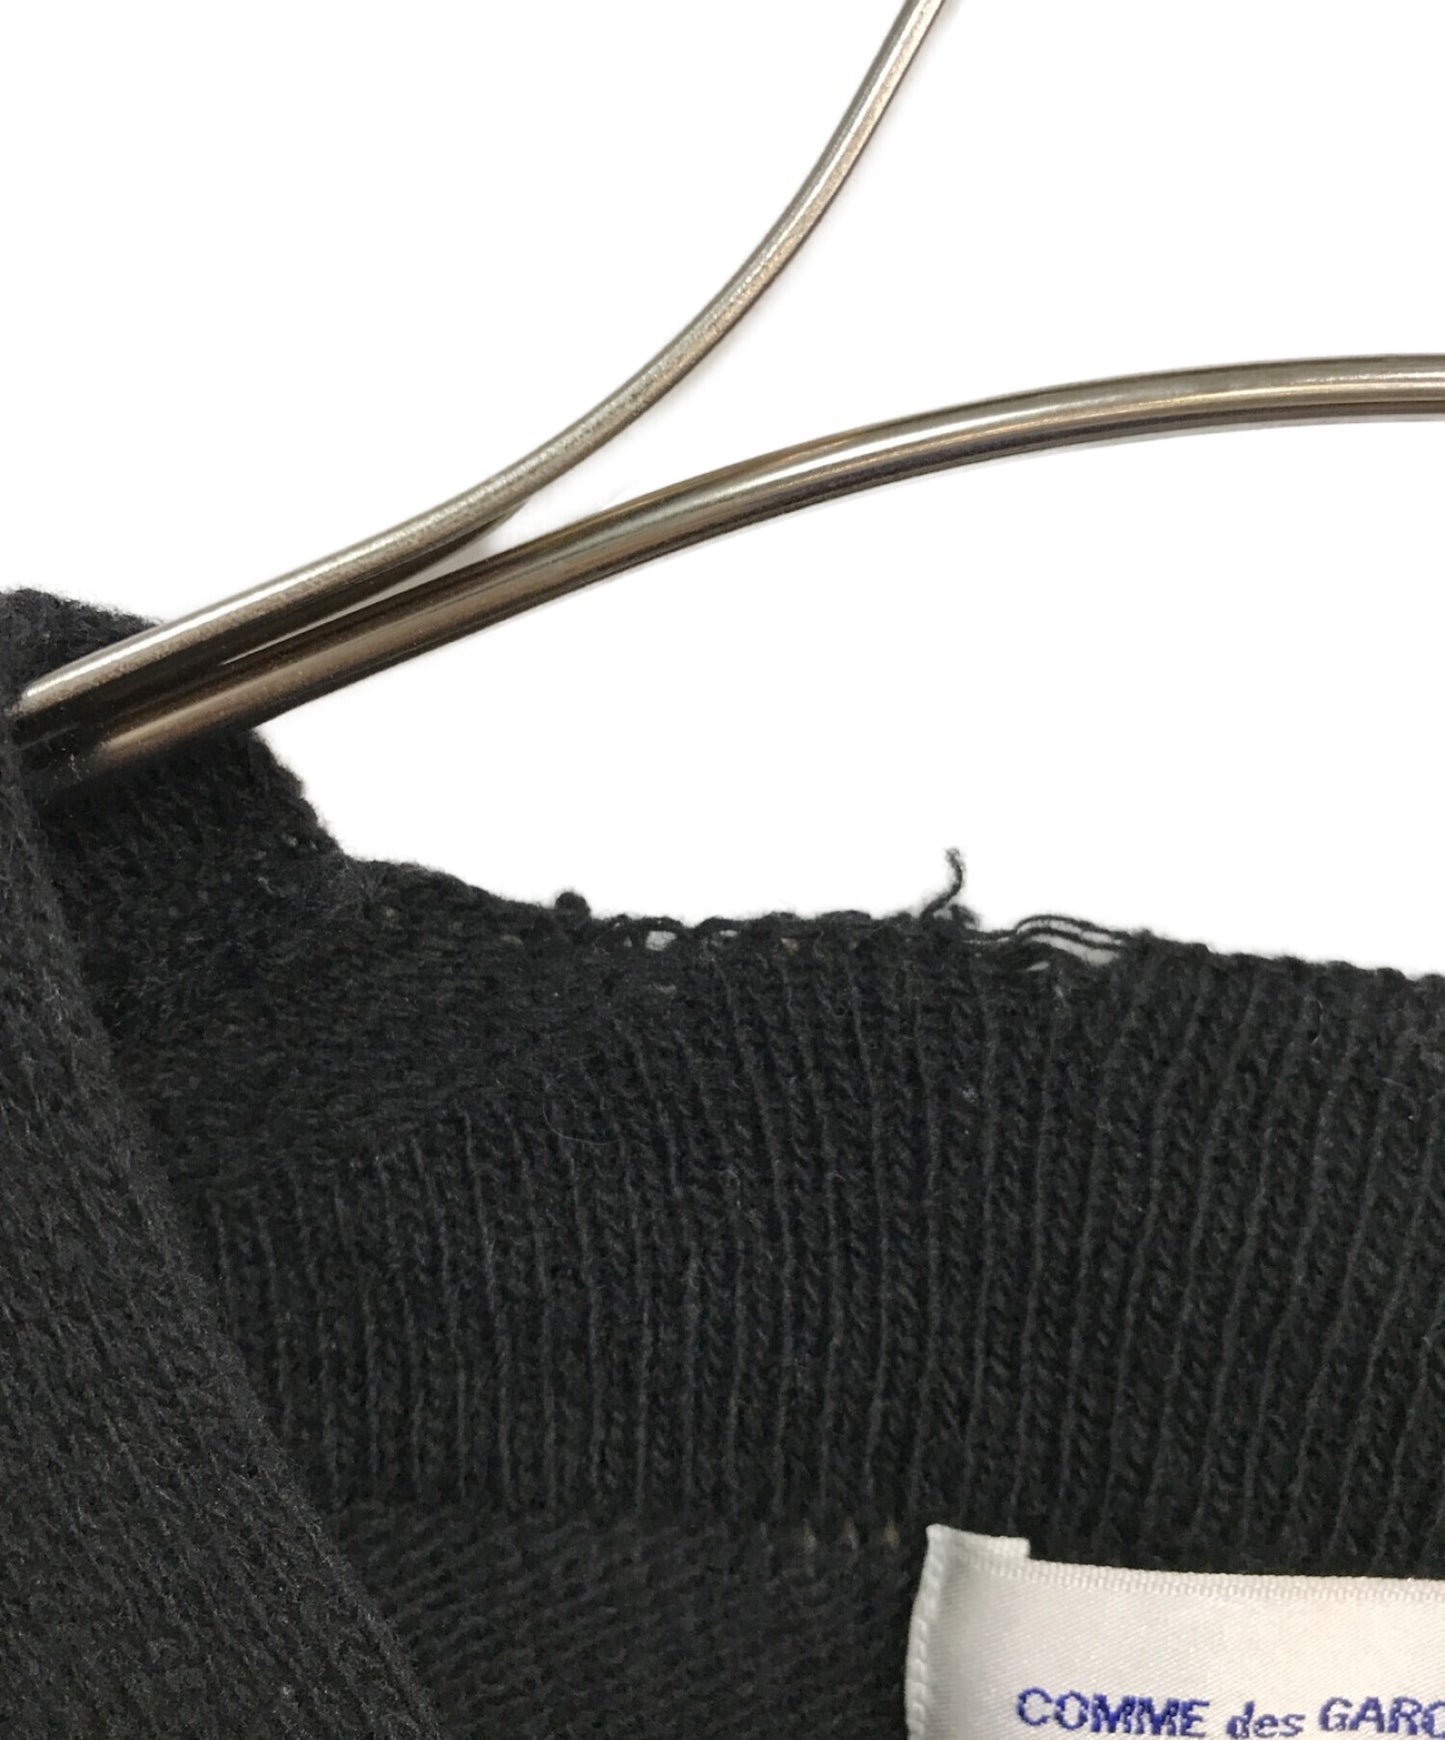 Comme des Garcons เสื้อเก่าของ 90 ที่สร้างขึ้นใน France Square Collar Knit